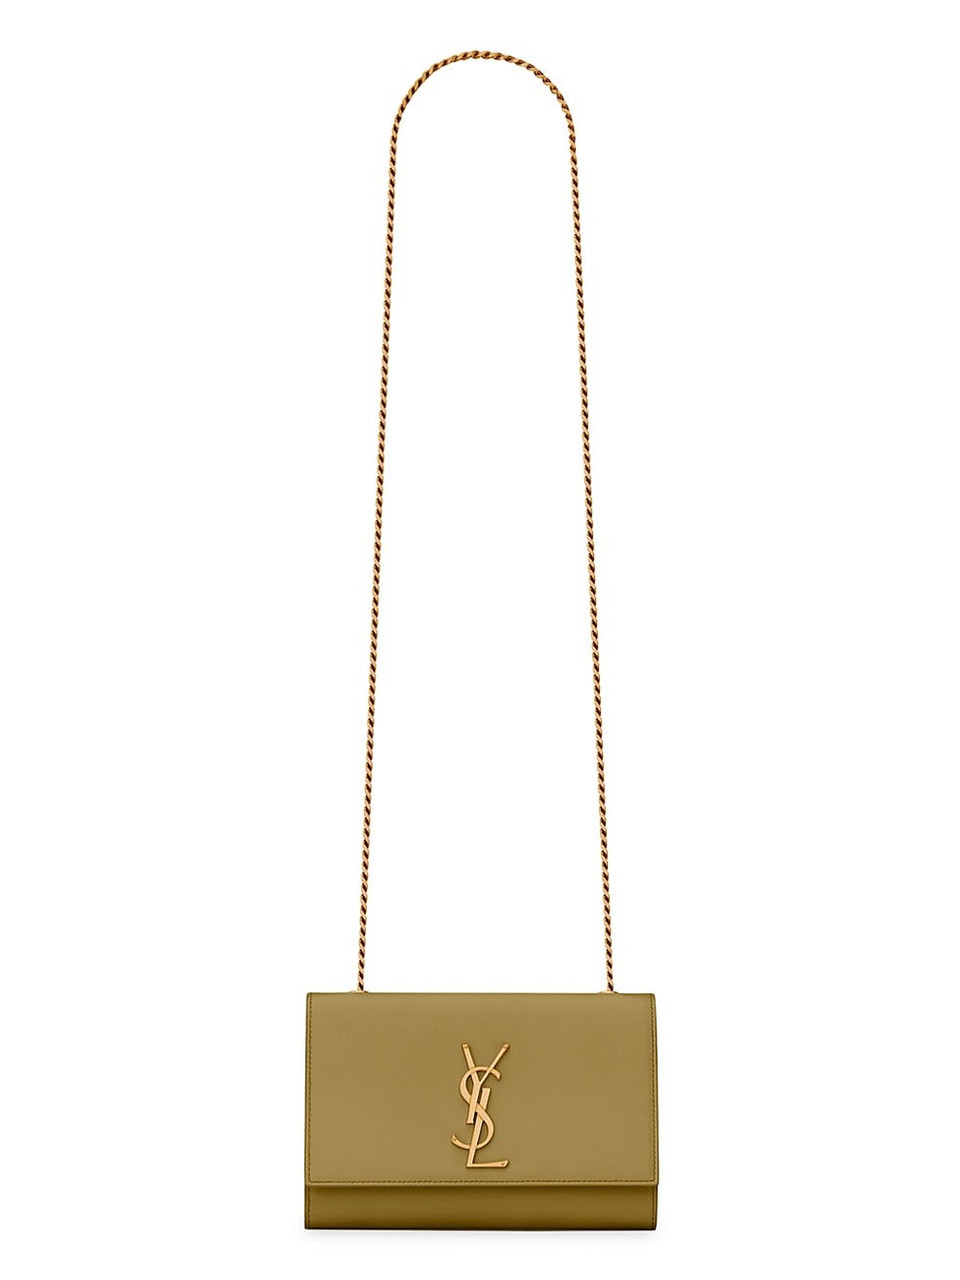 Saint Laurent Gold Embossed Leather Monogram Kate Tassel Clutch